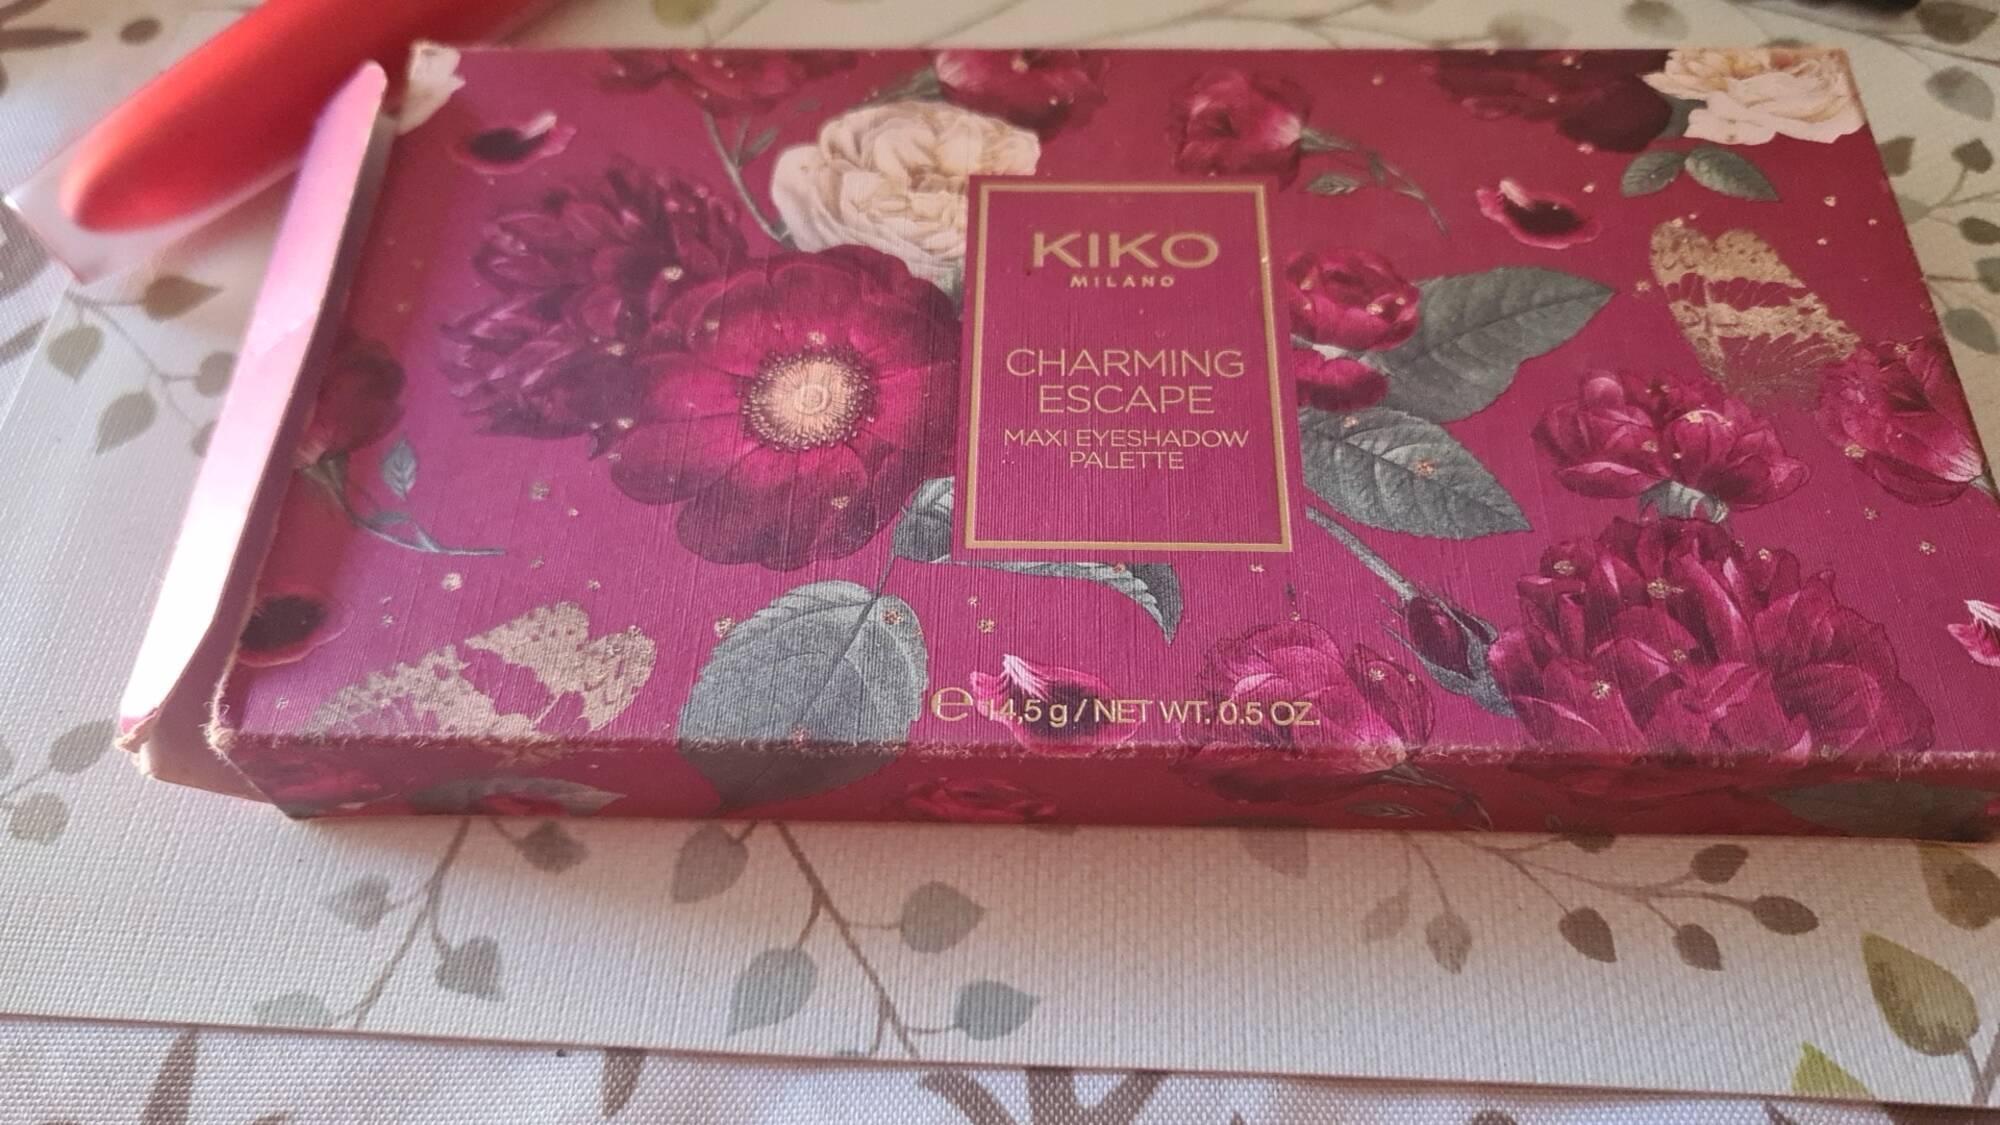 KIKO - Charming escape - Maxi eyeshadow palette